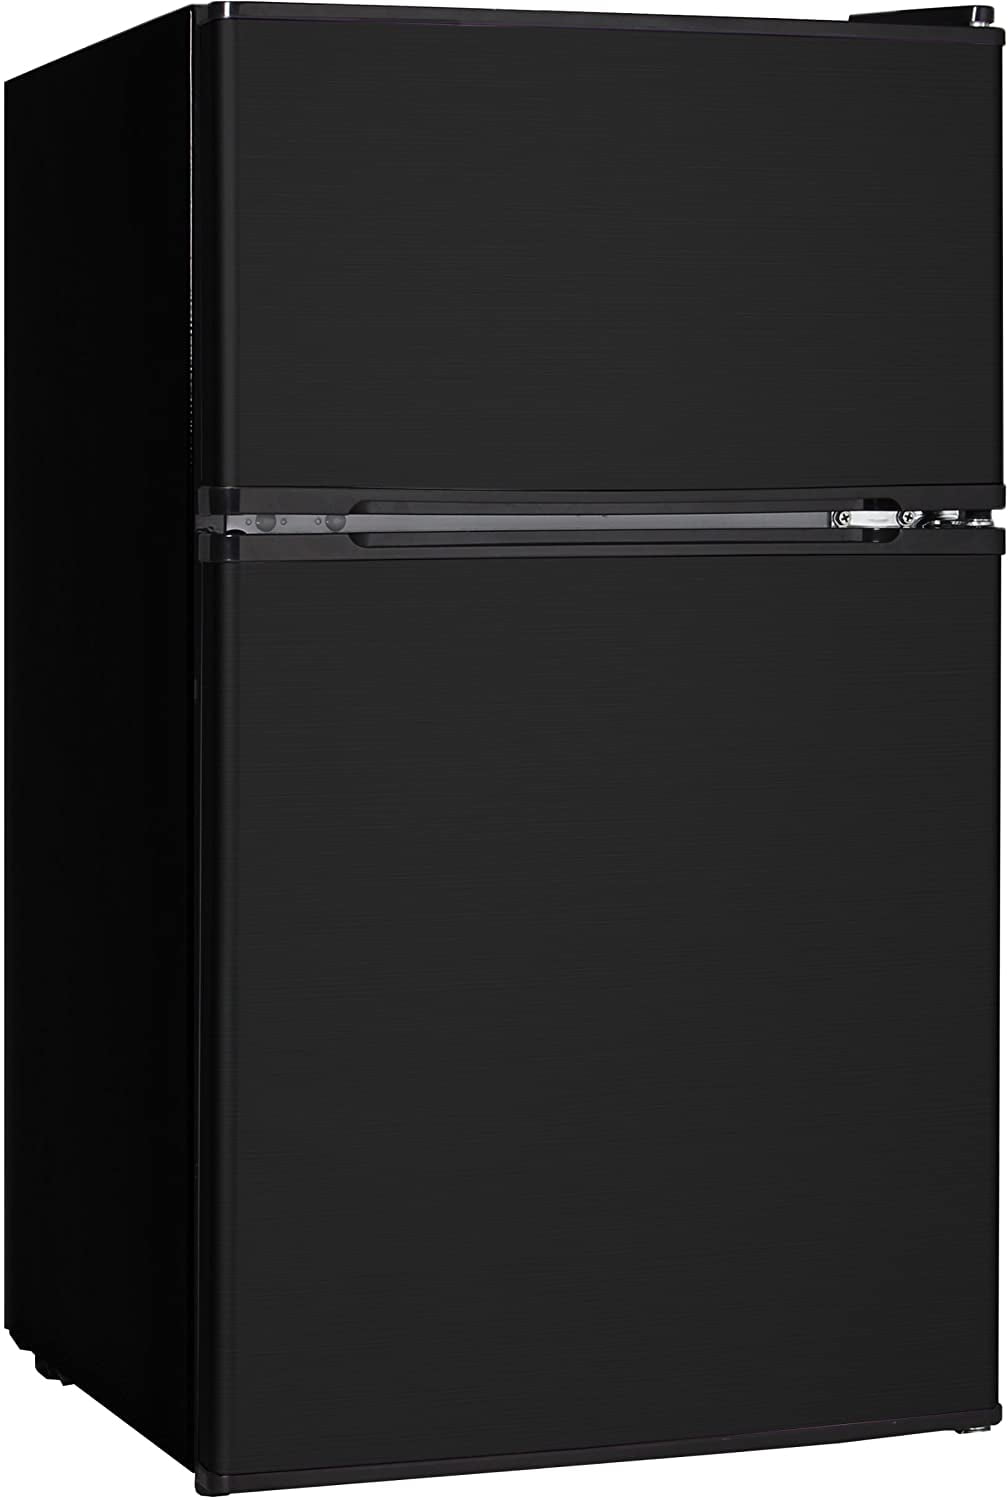 Compact Refrigerator Midea 3.1 Cu WHD-113FB1 Black Ft